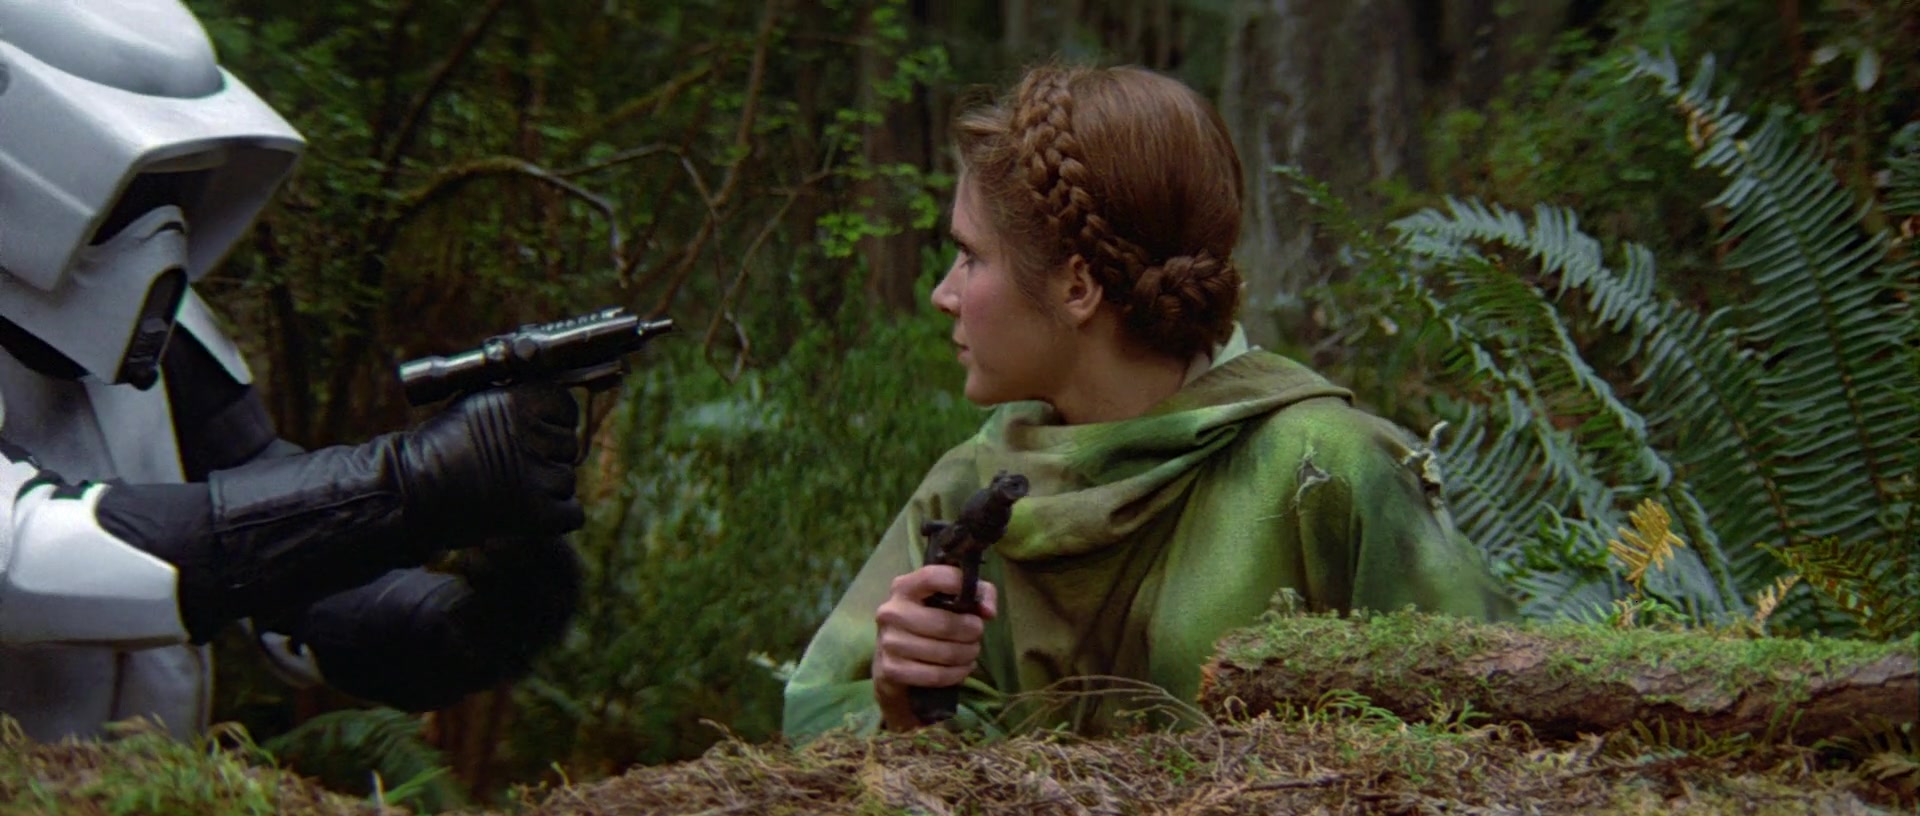 Star Wars Episode VI: Star Wars Return of the Jedi (1983) .